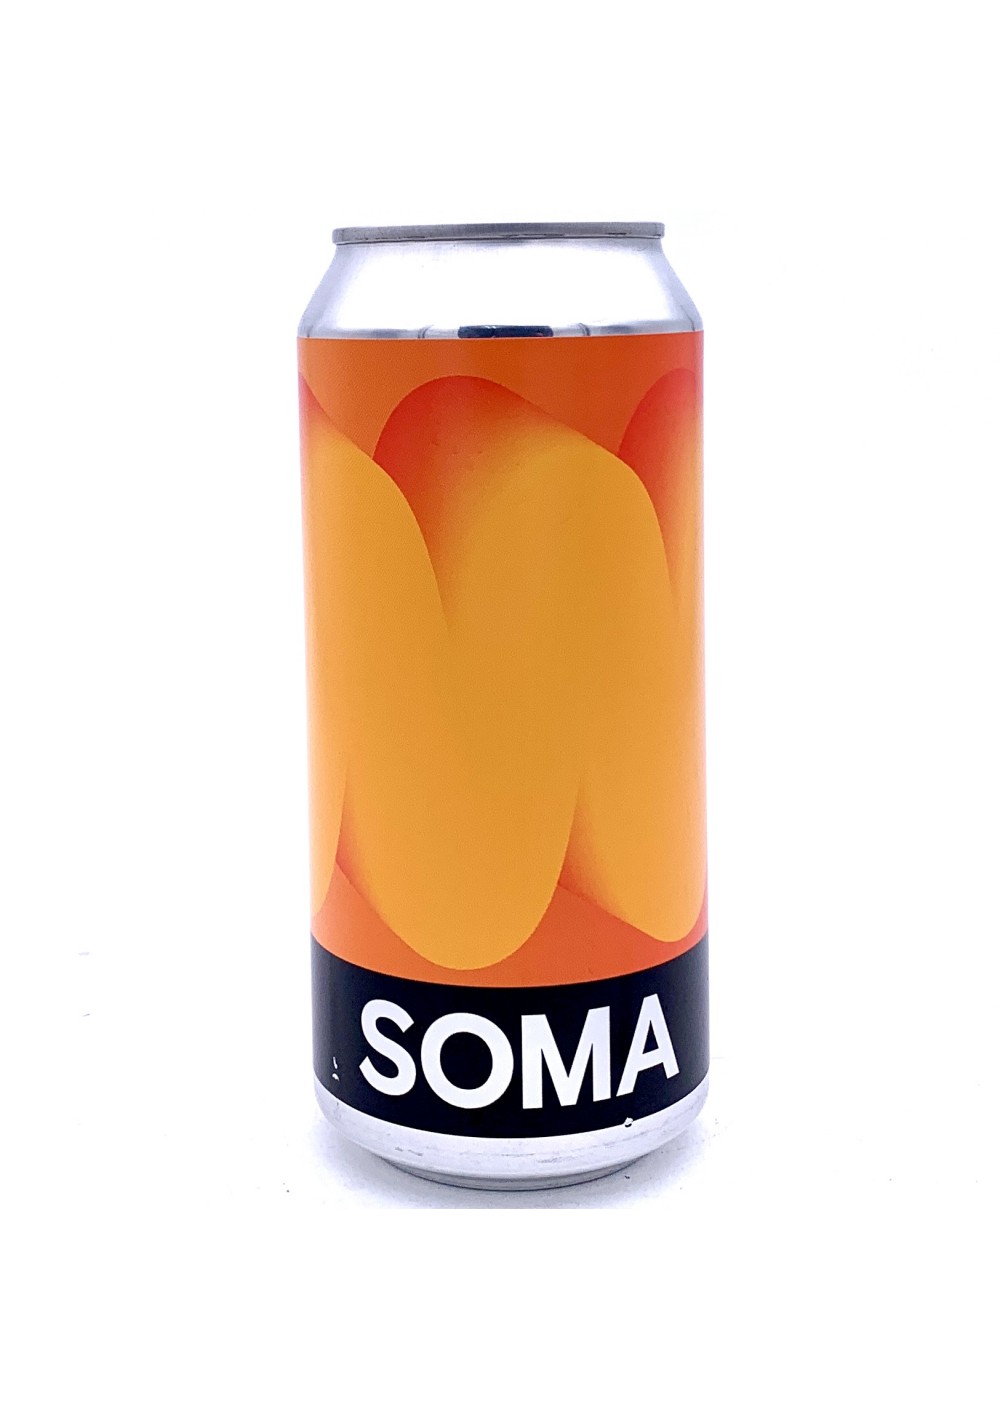 SOMA - Bounce - New England IPA